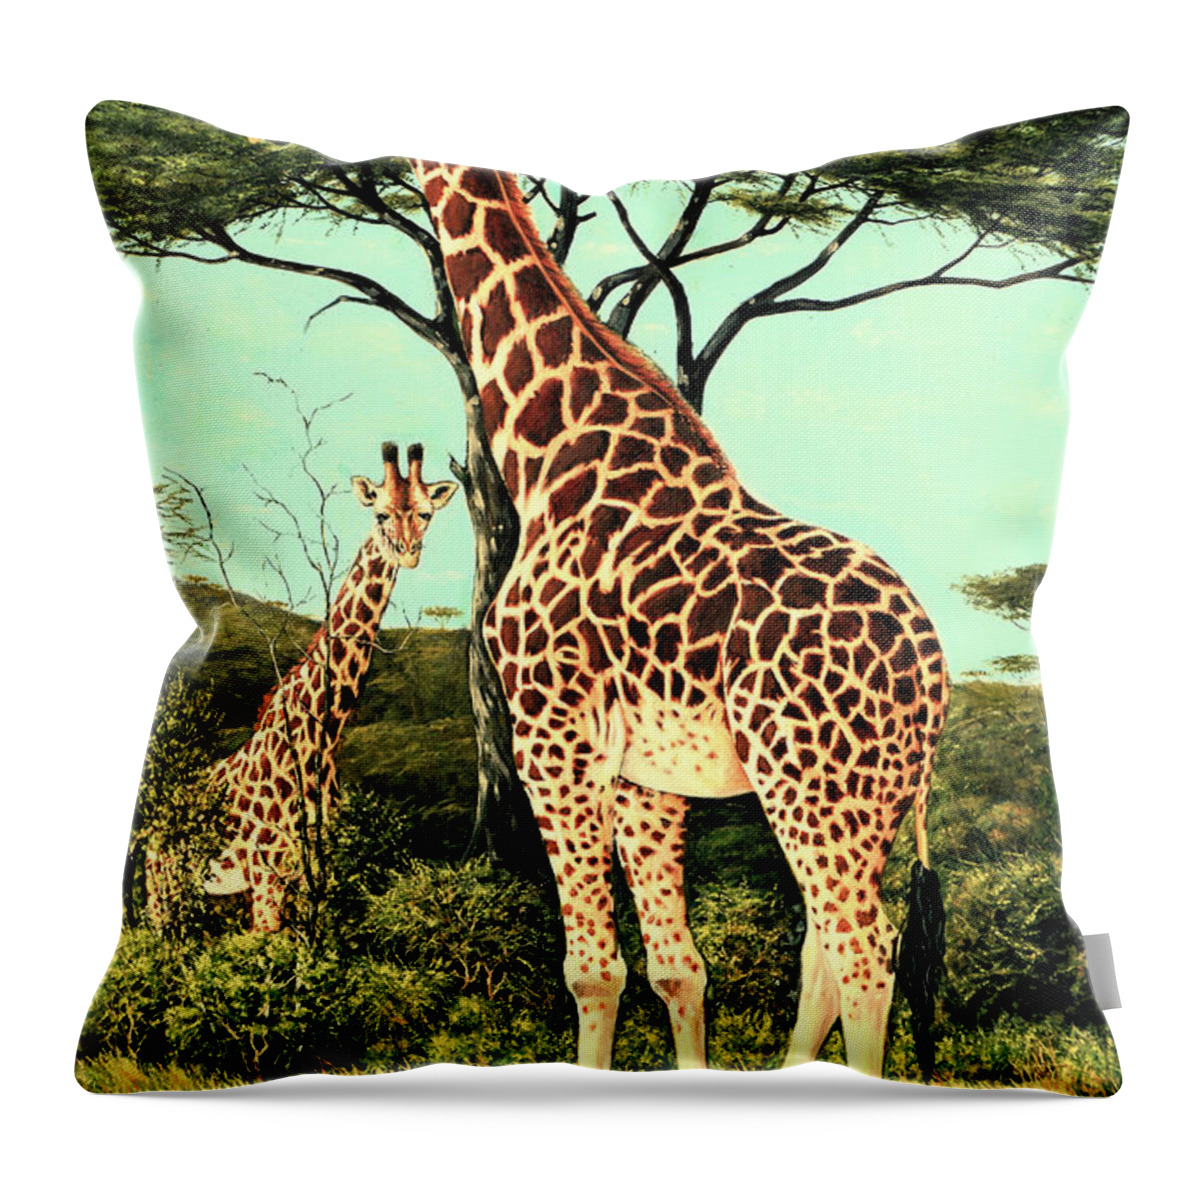 Giraffes Throw Pillow featuring the painting Serengeti Giraffes by Charles Berry